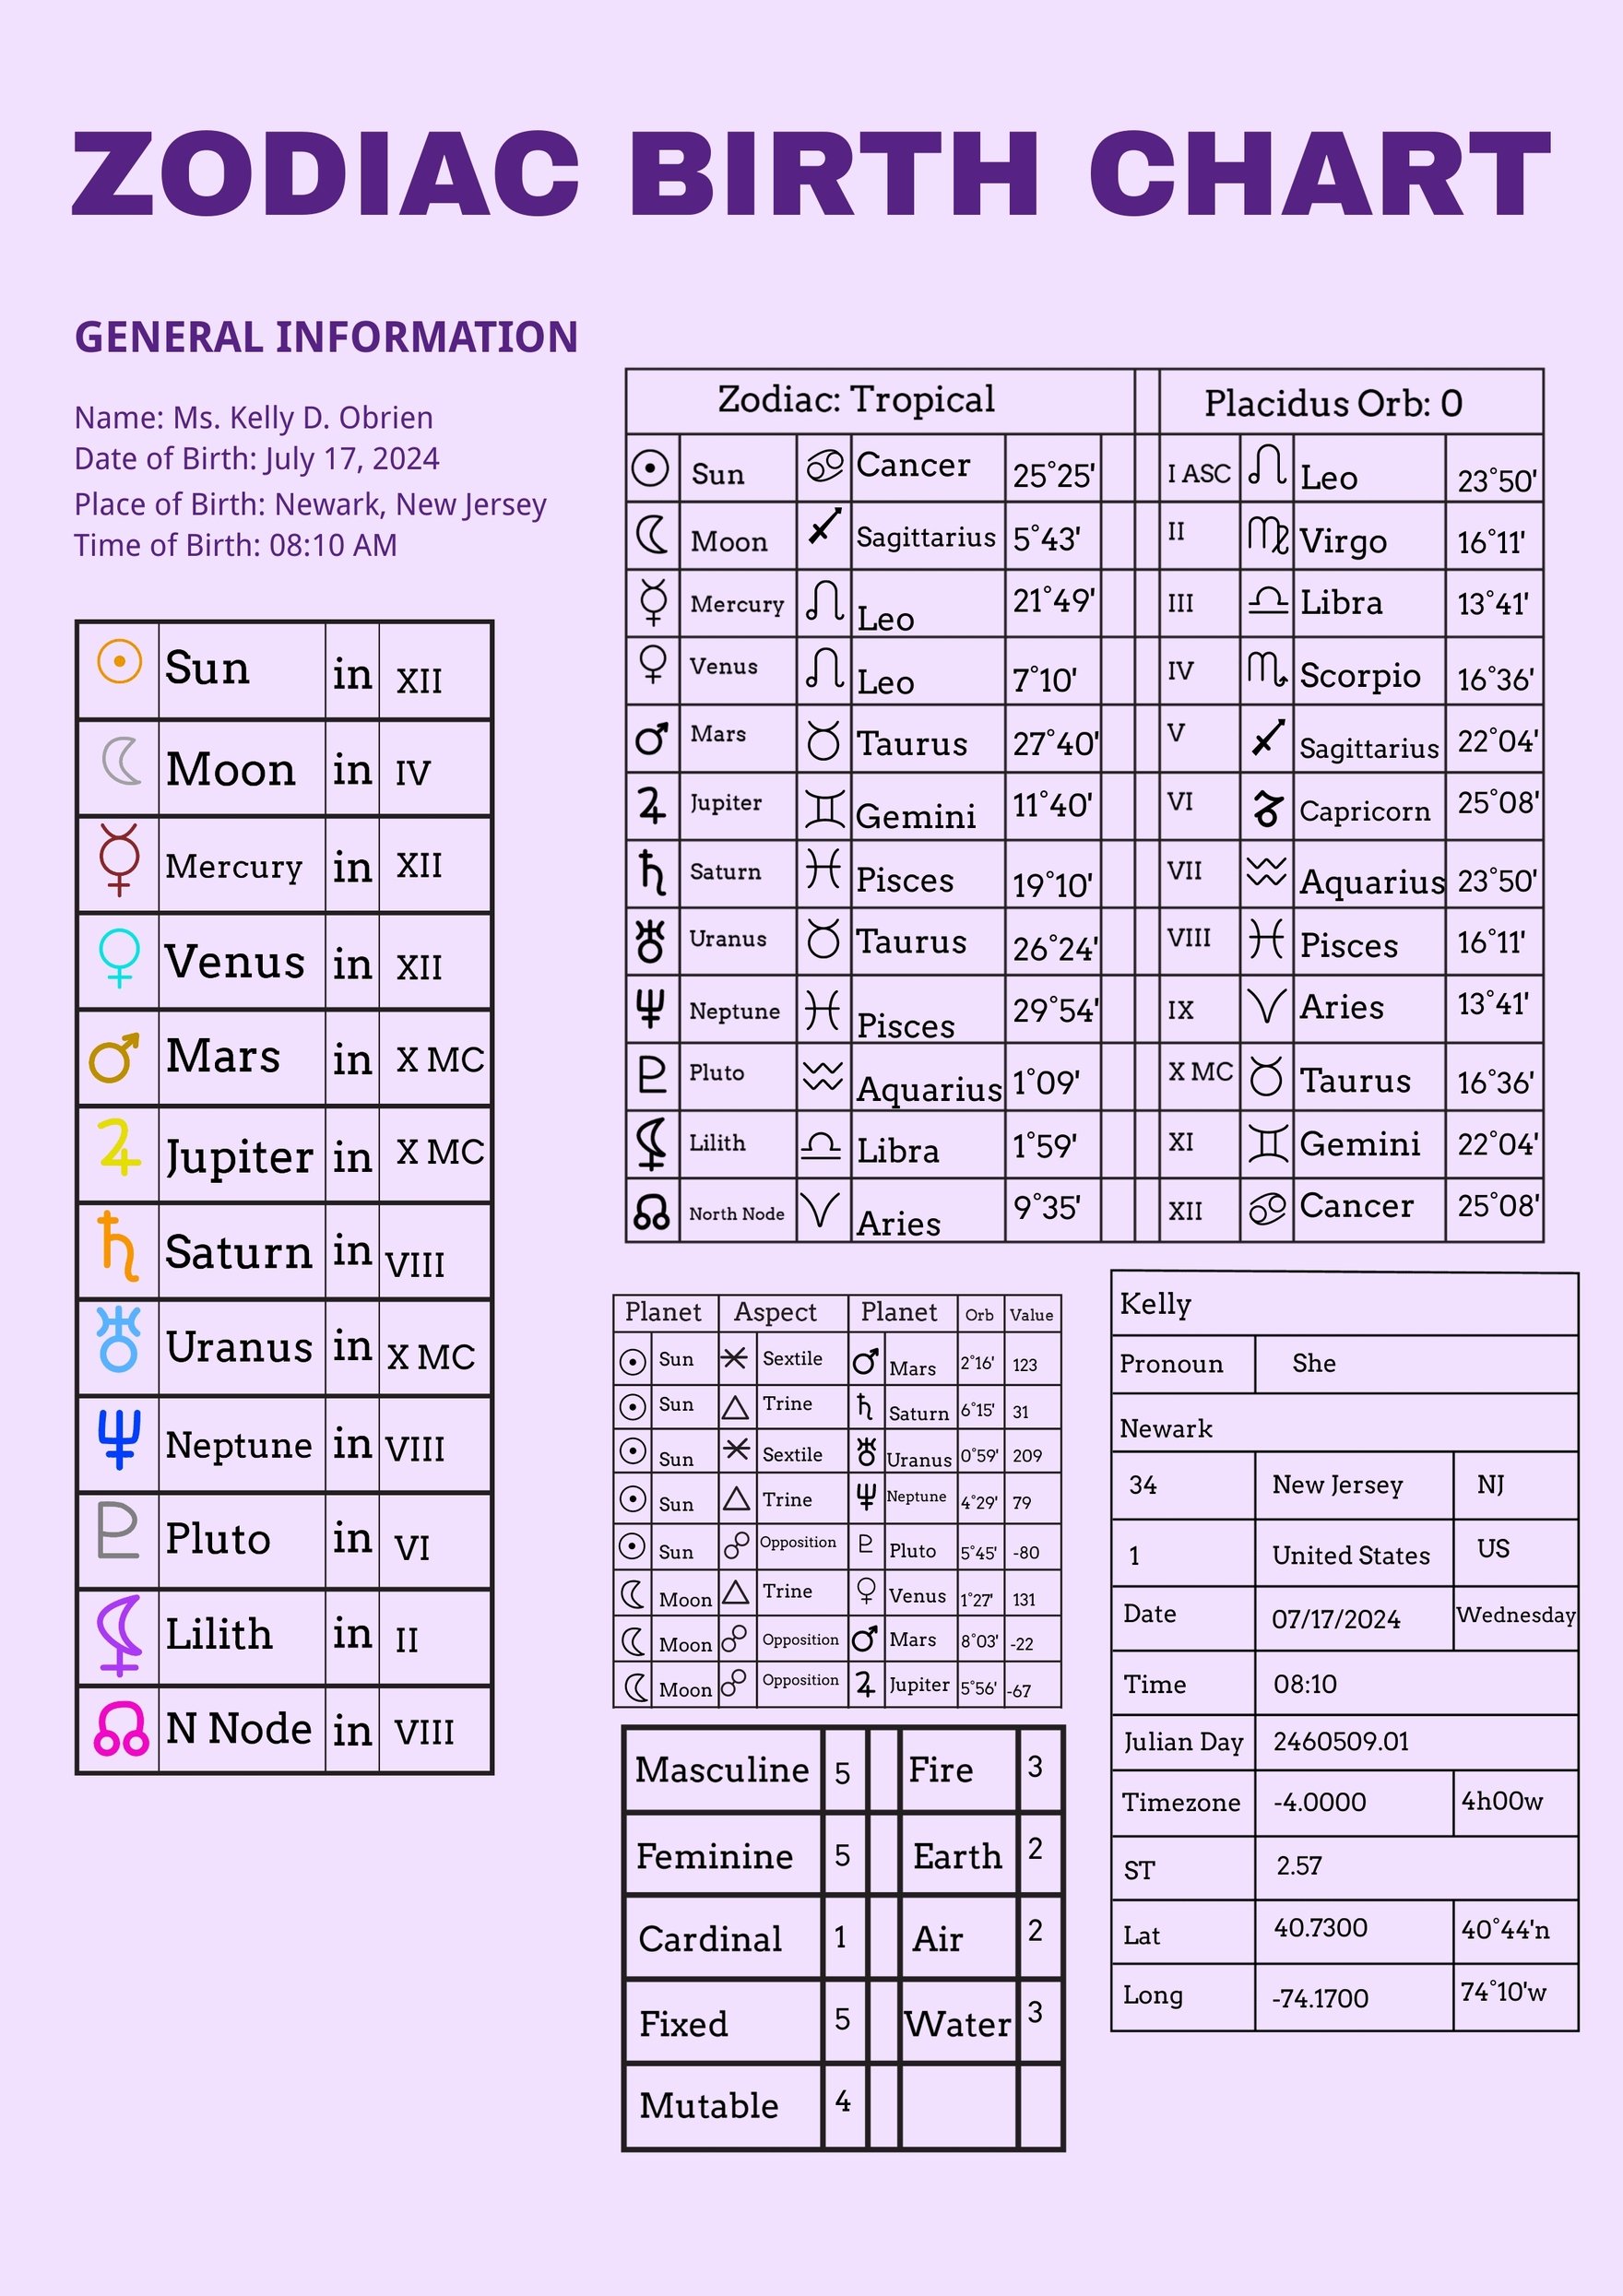 Zodiac Birth Chart Template In Illustrator Pdf Download